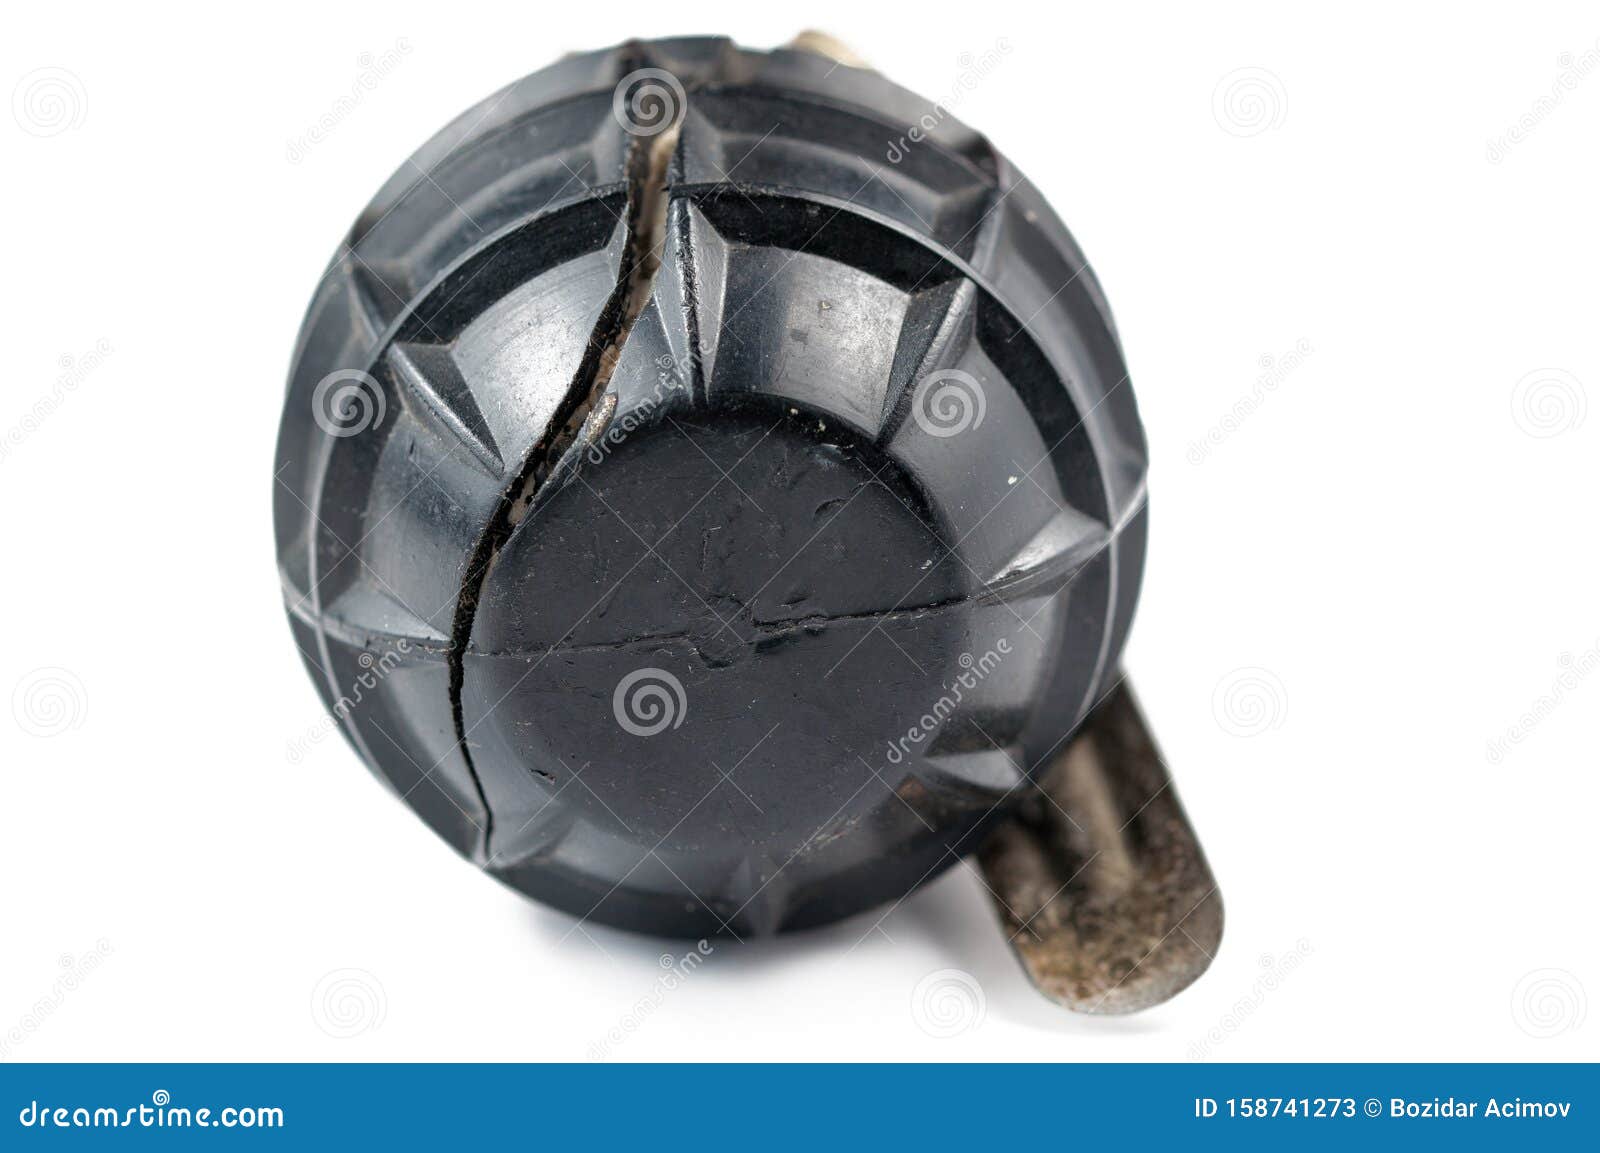 Pin on ring bomb